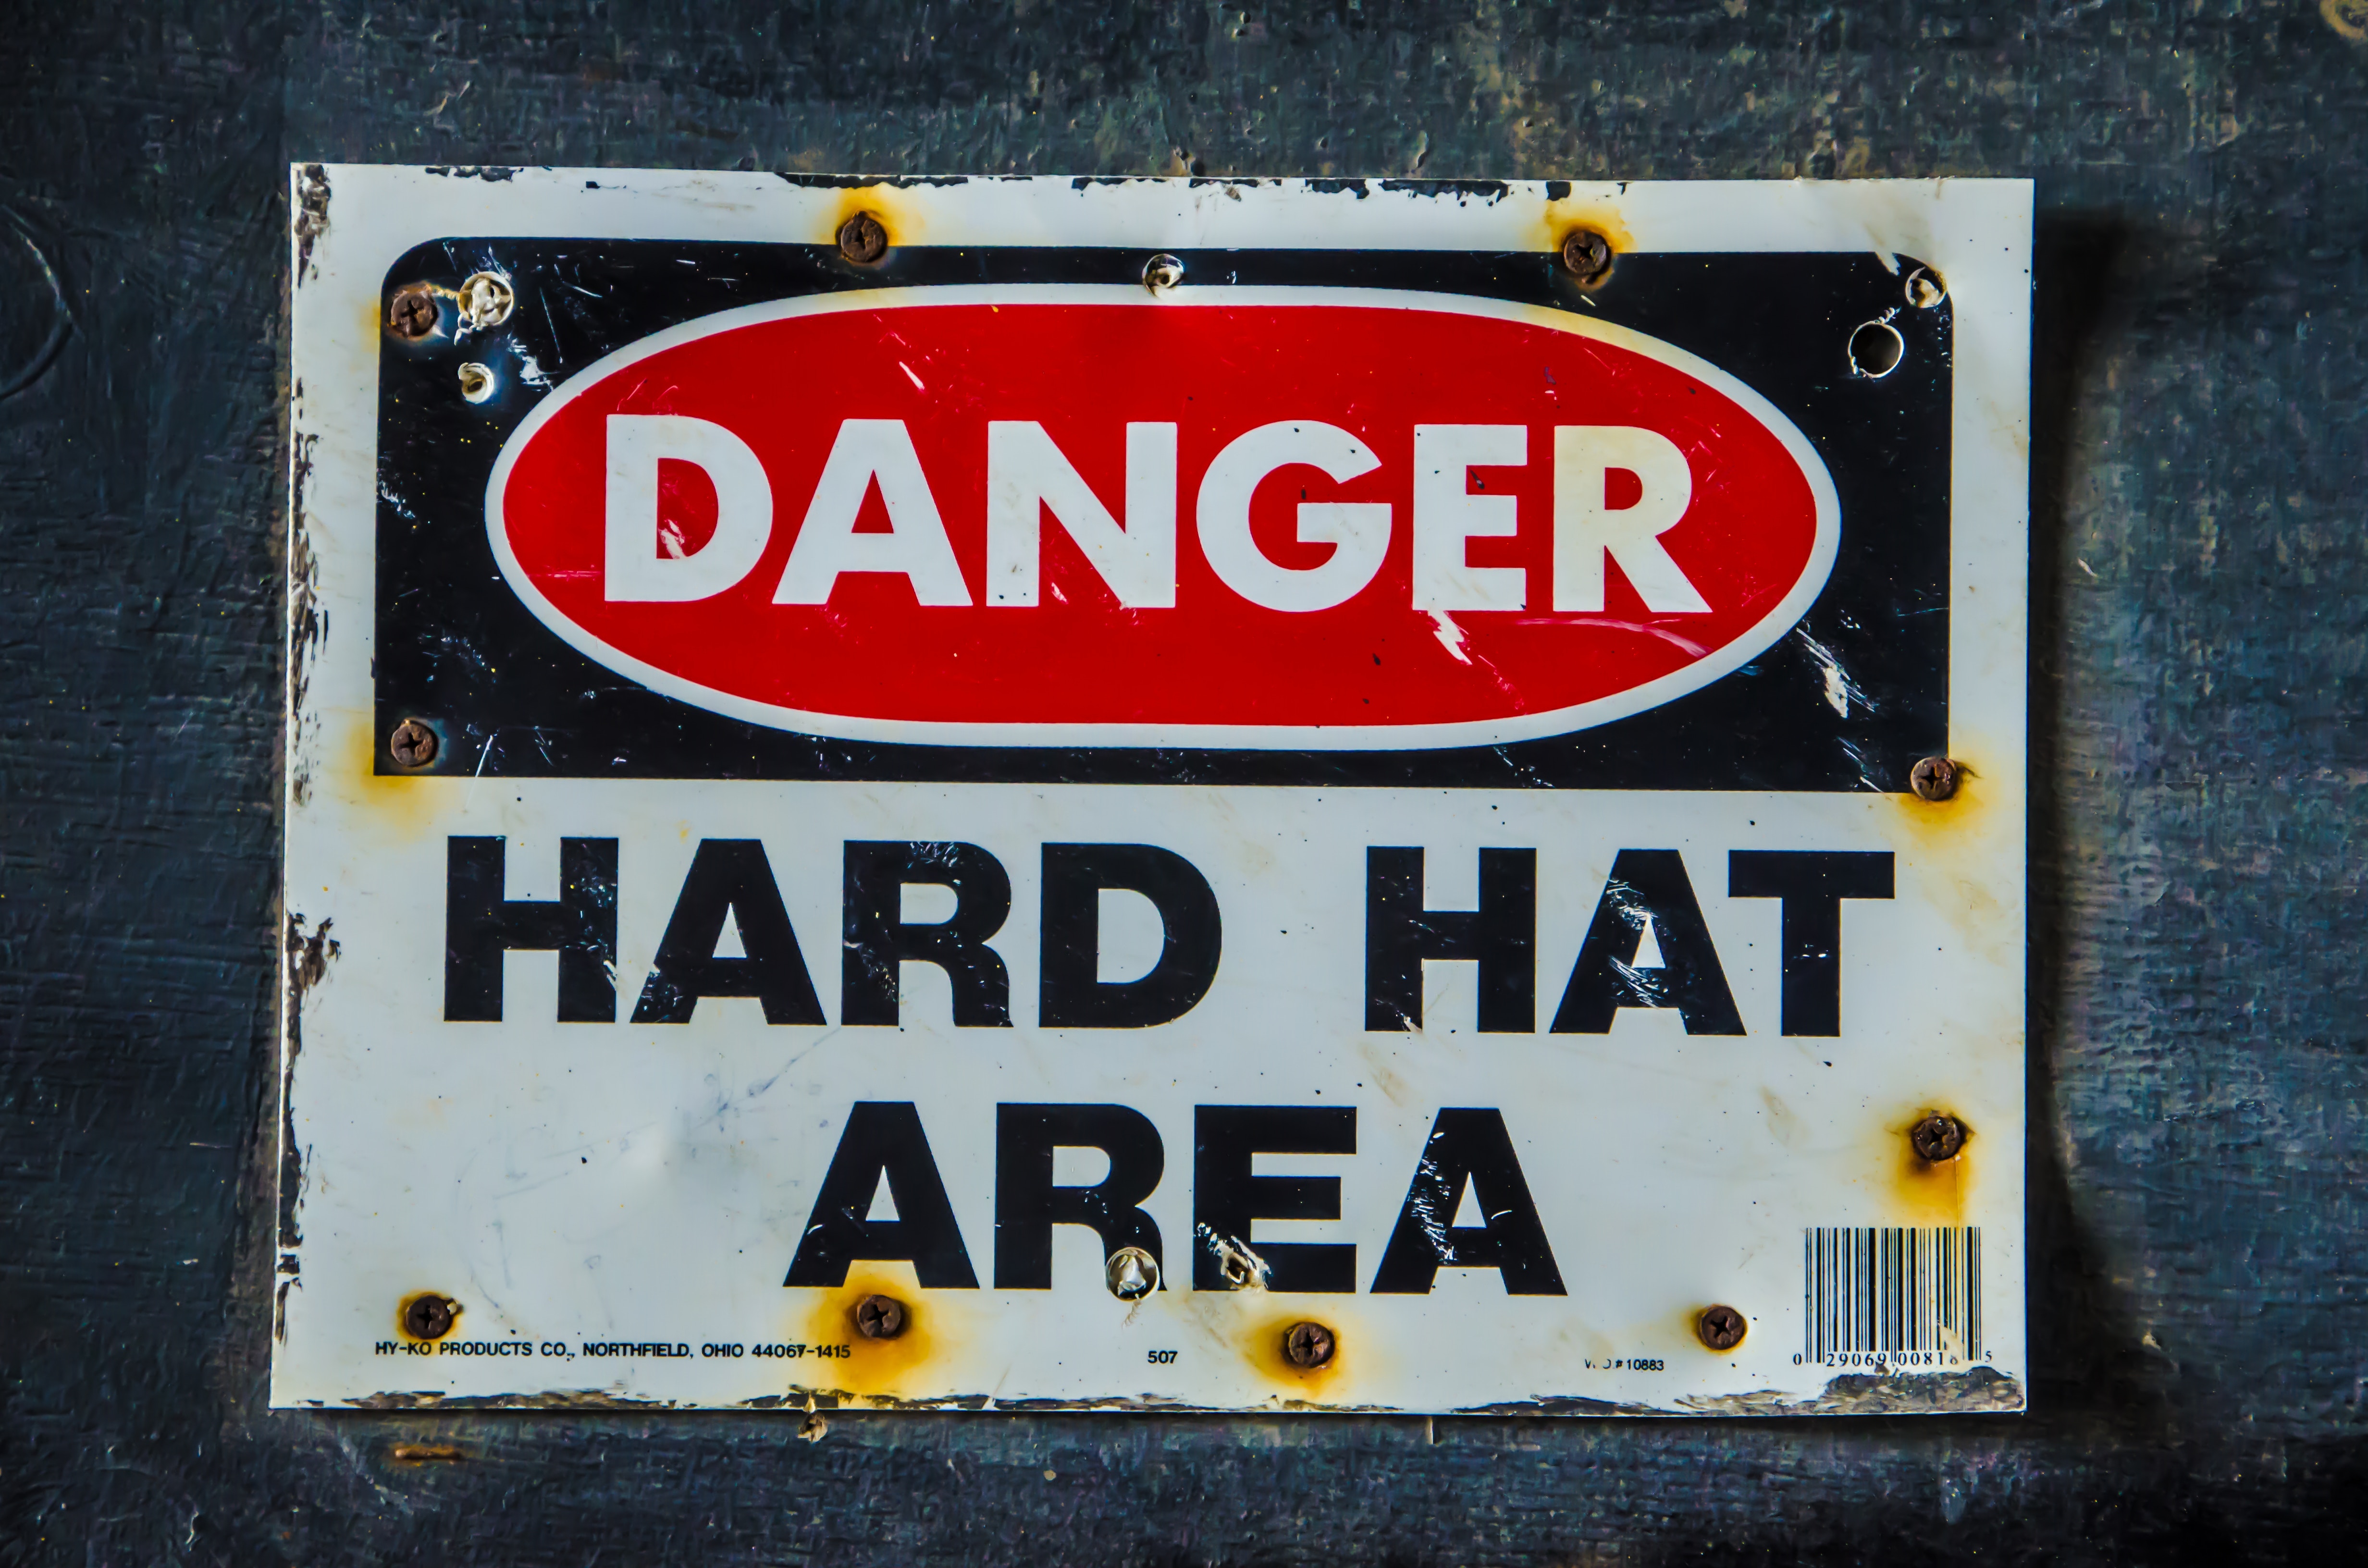 Sign saying "Danger Hard Hat Area"